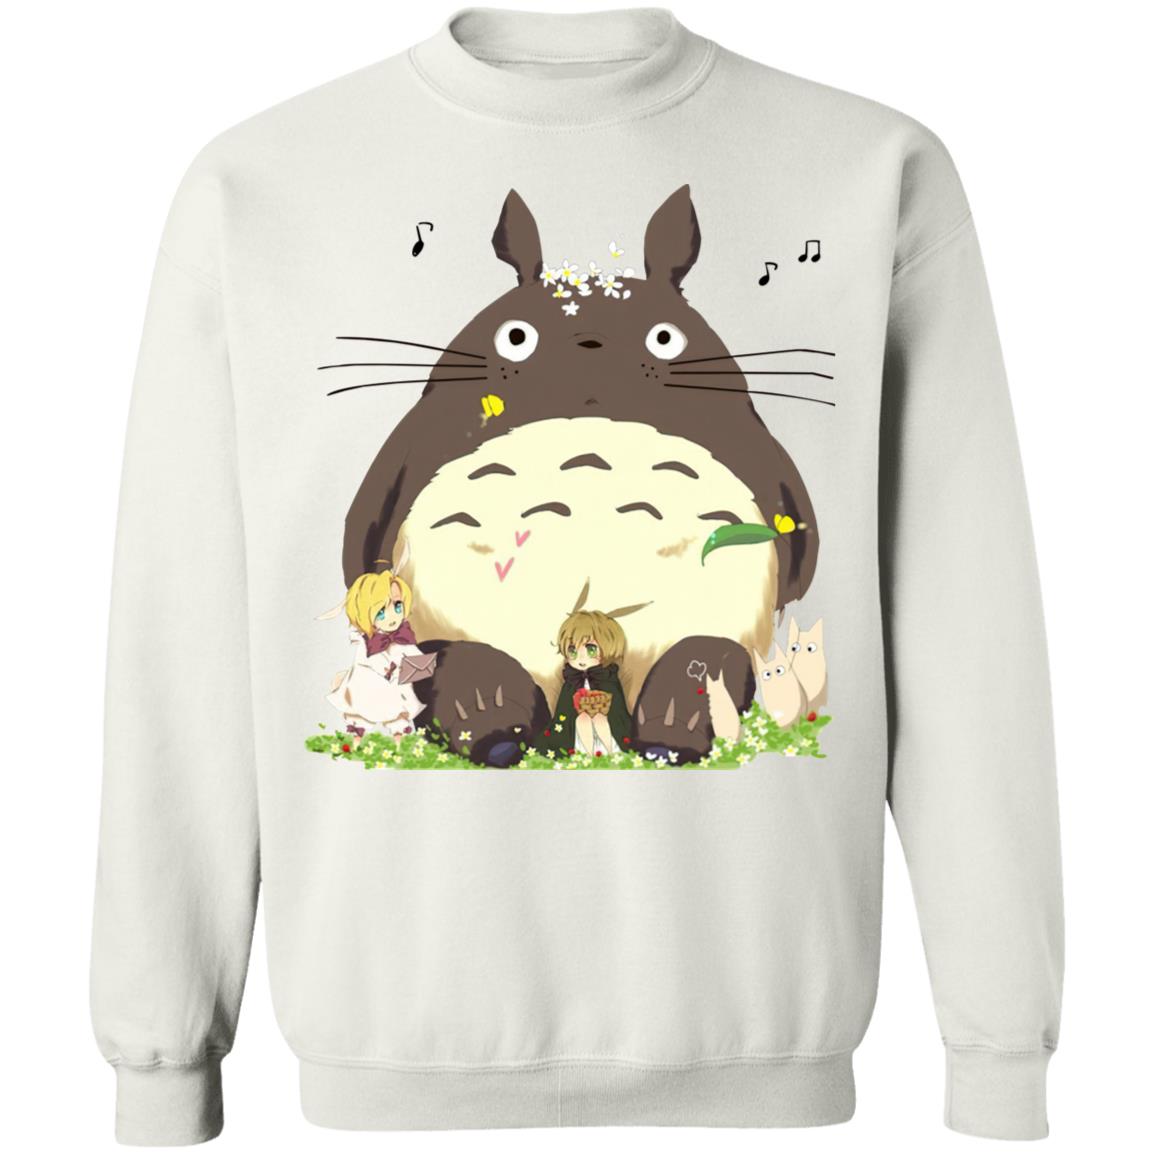 Totoro and the Elves Sweatshirt